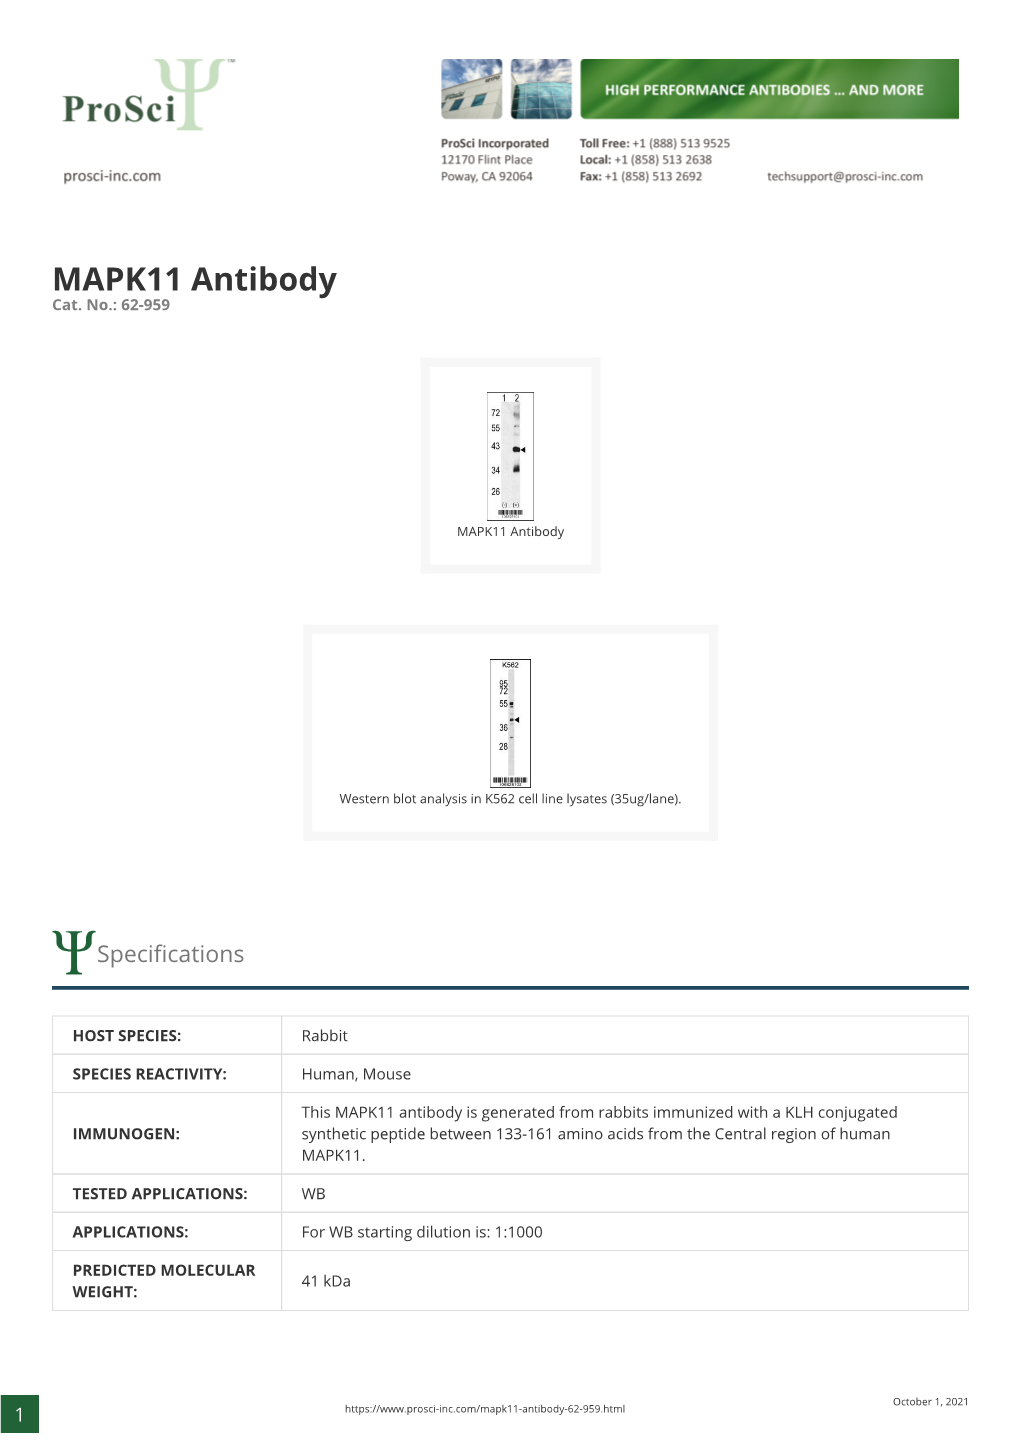 MAPK11 Antibody Cat